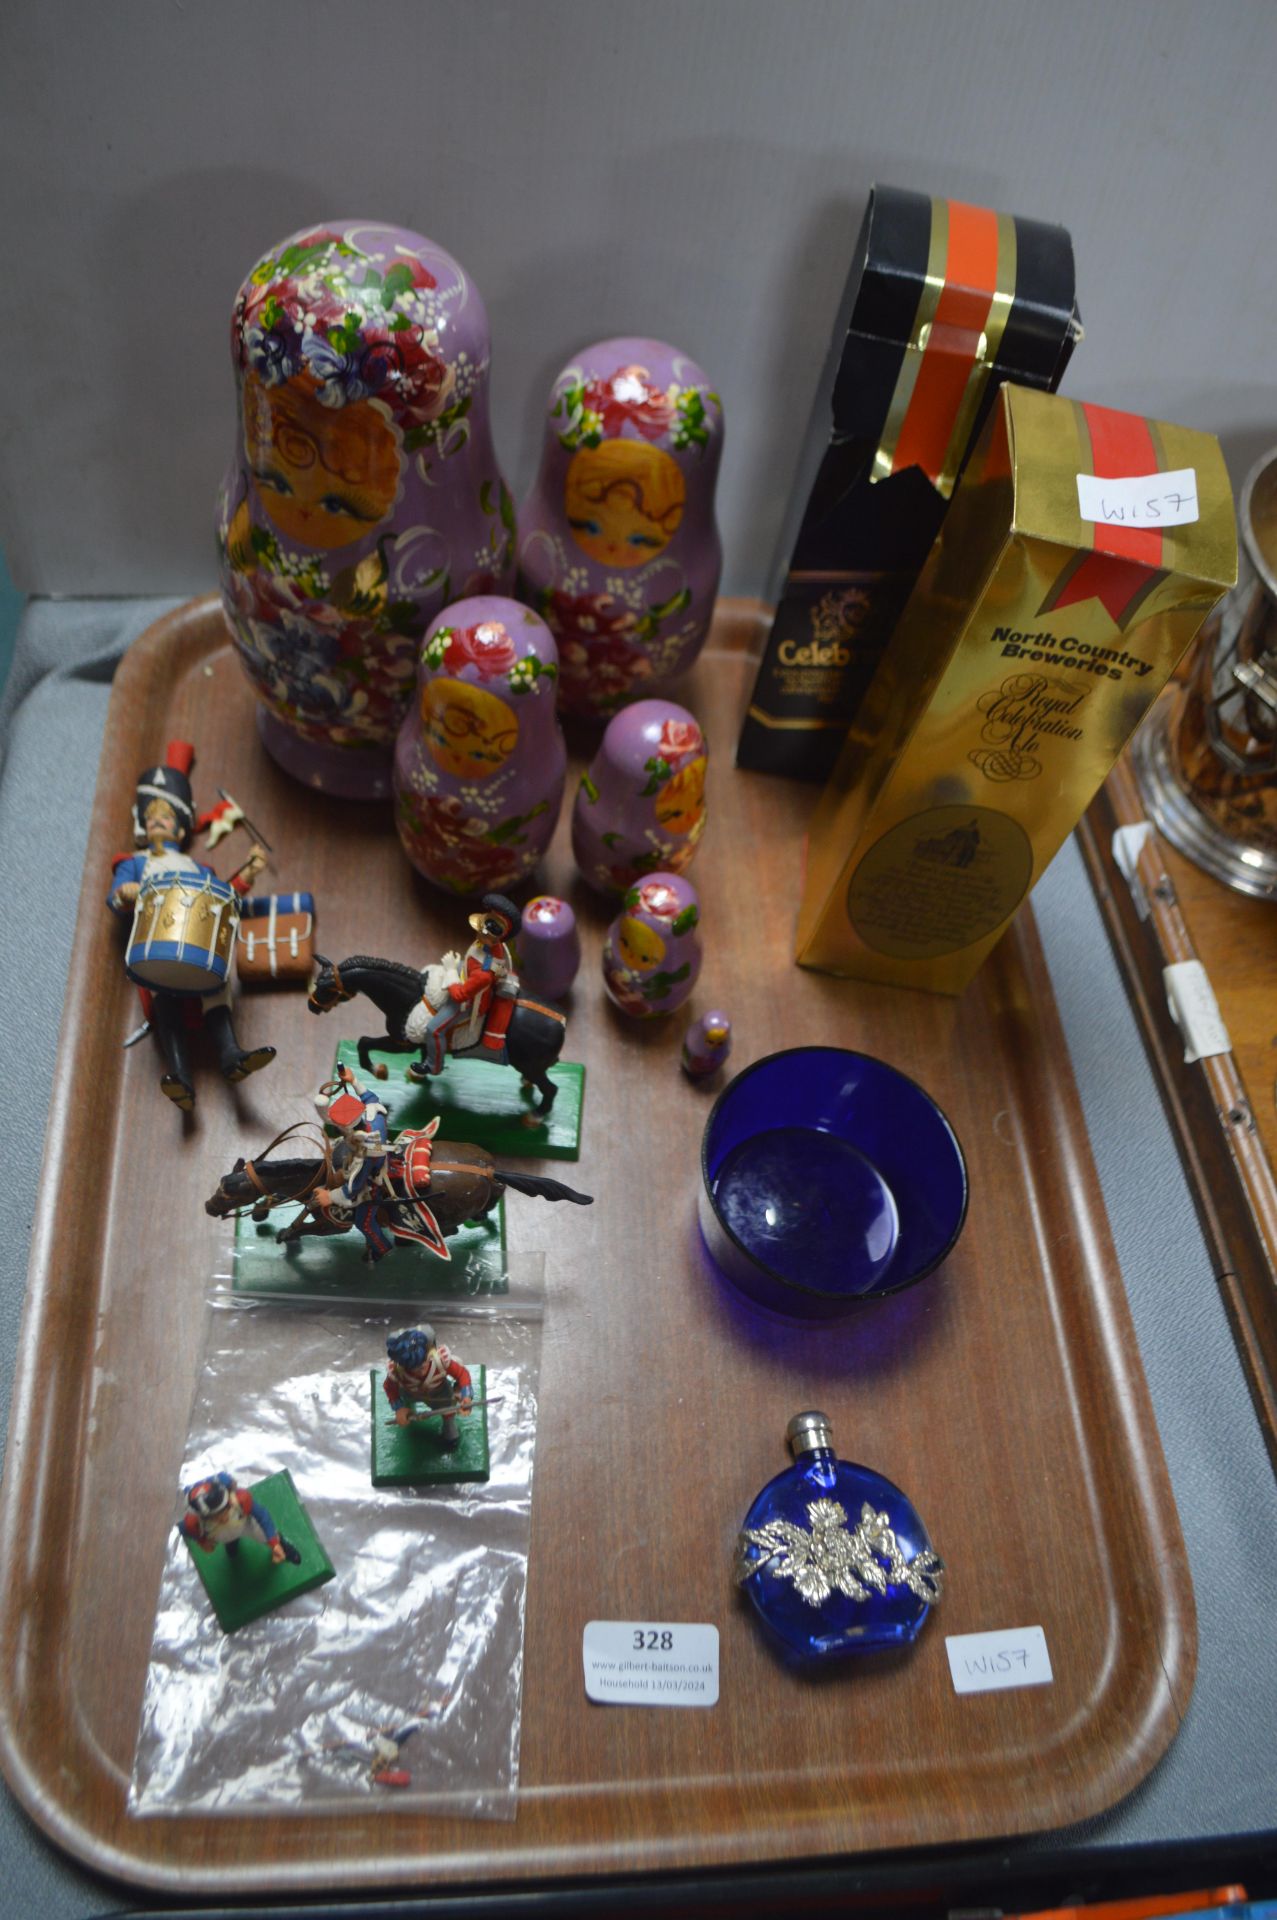 Decorative Items Including Matryoshka Dolls, North